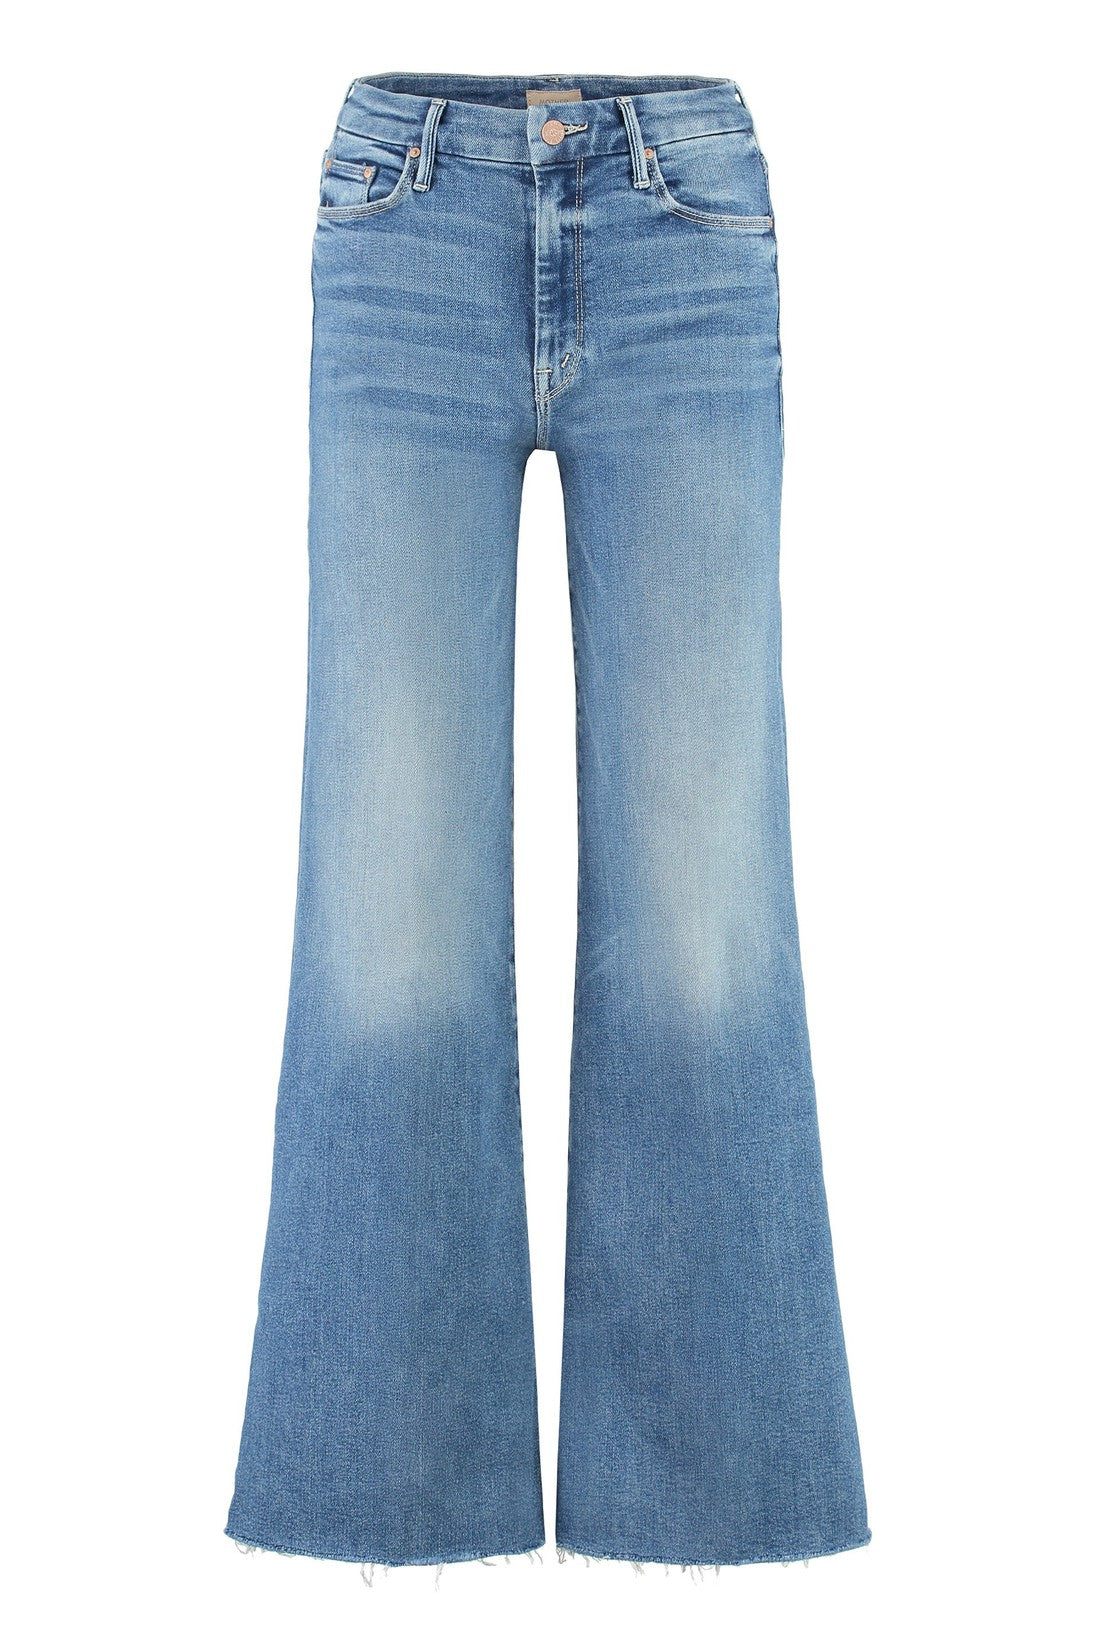 Mother-OUTLET-SALE-The Roller 5-pocket straight-leg jeans-ARCHIVIST